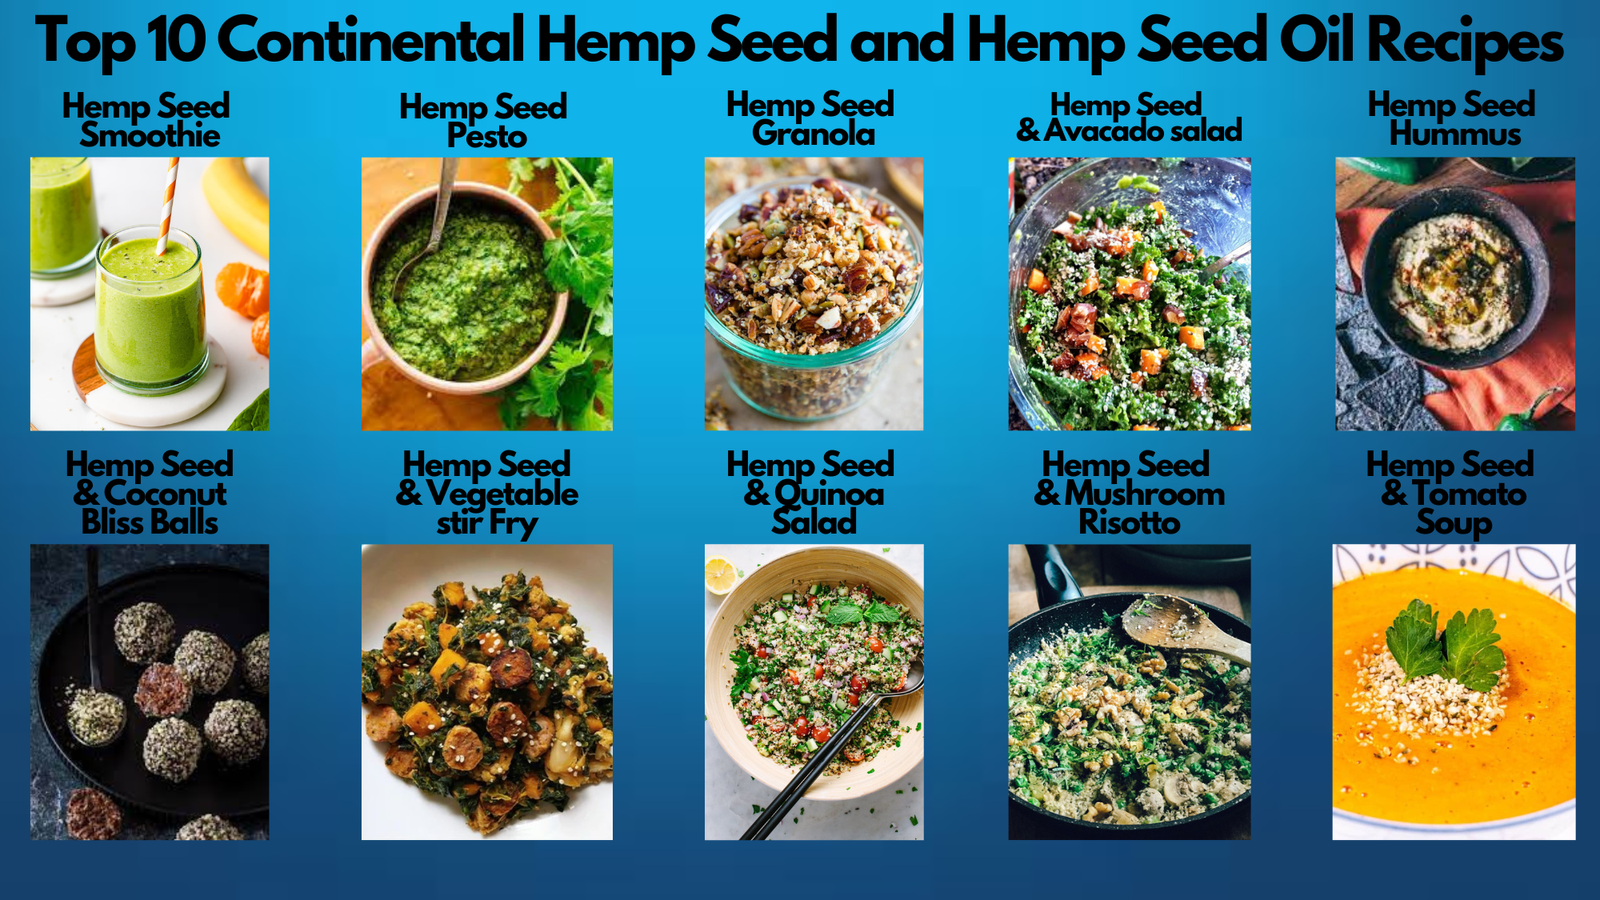 Top 10 Continental Hemp Seed and Hemp Seed Oil Recipes